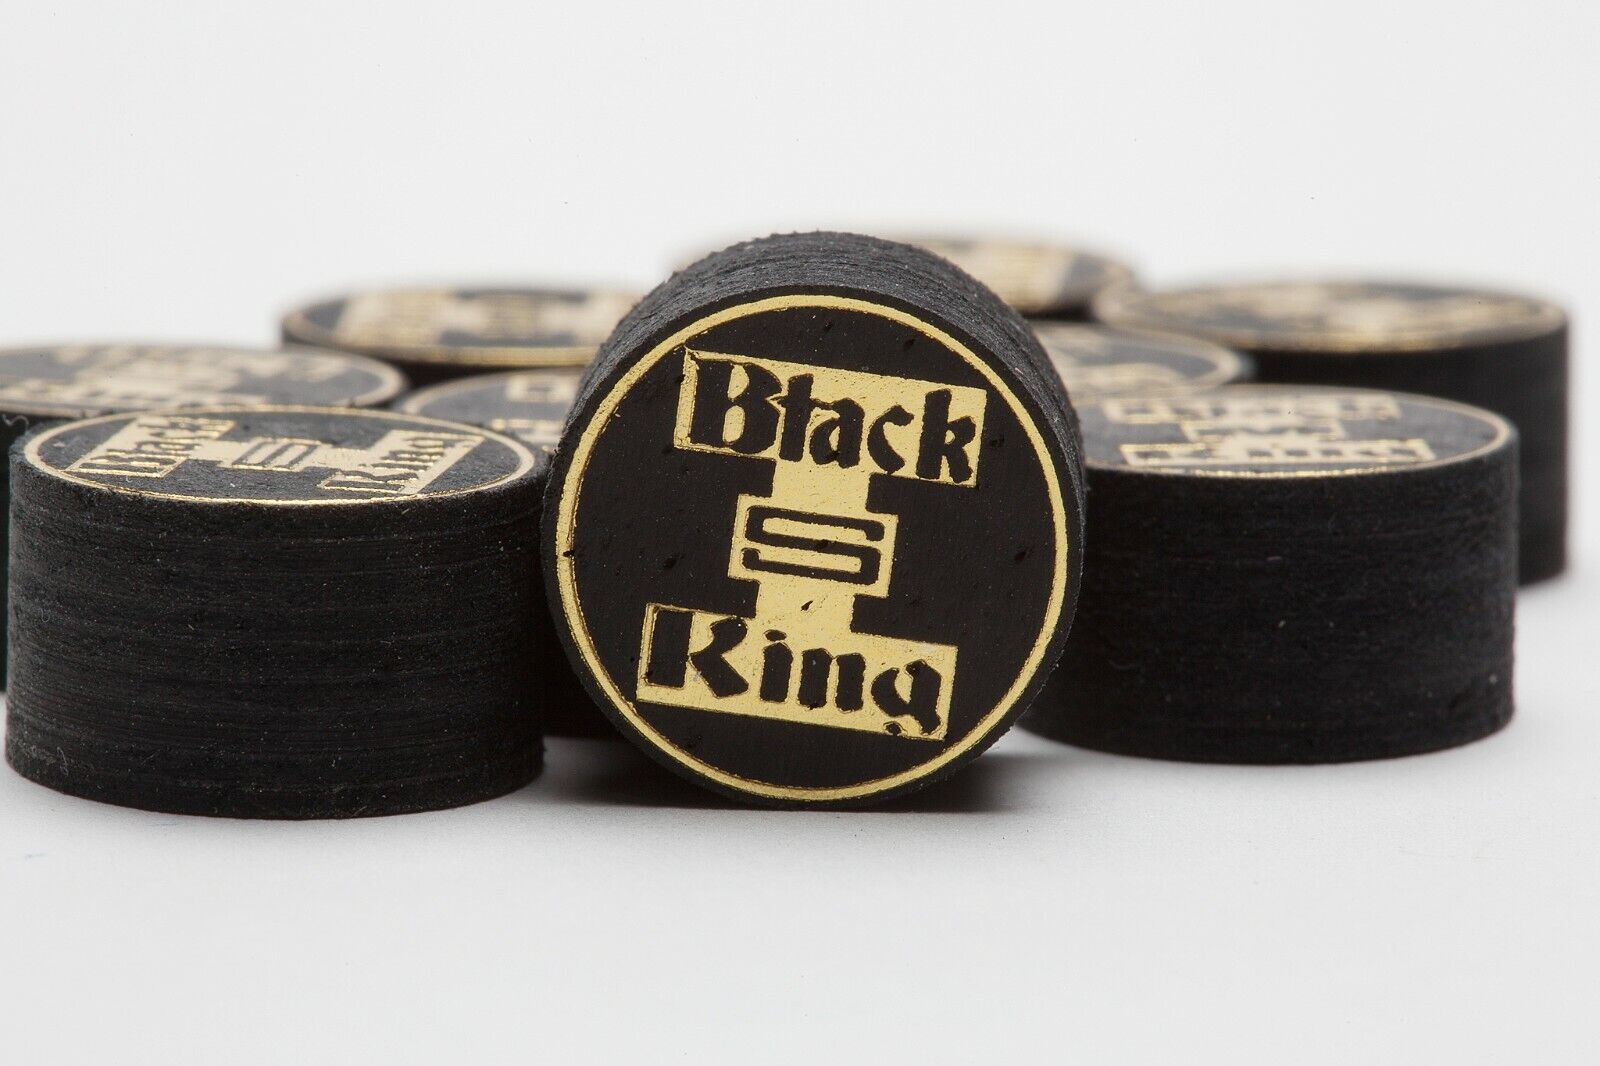 3 Black King Tips- Pool Cue Tips - Billiard Tips Layered Pigskin Like Kamui 14mm Black King Does Not Apply - фотография #5